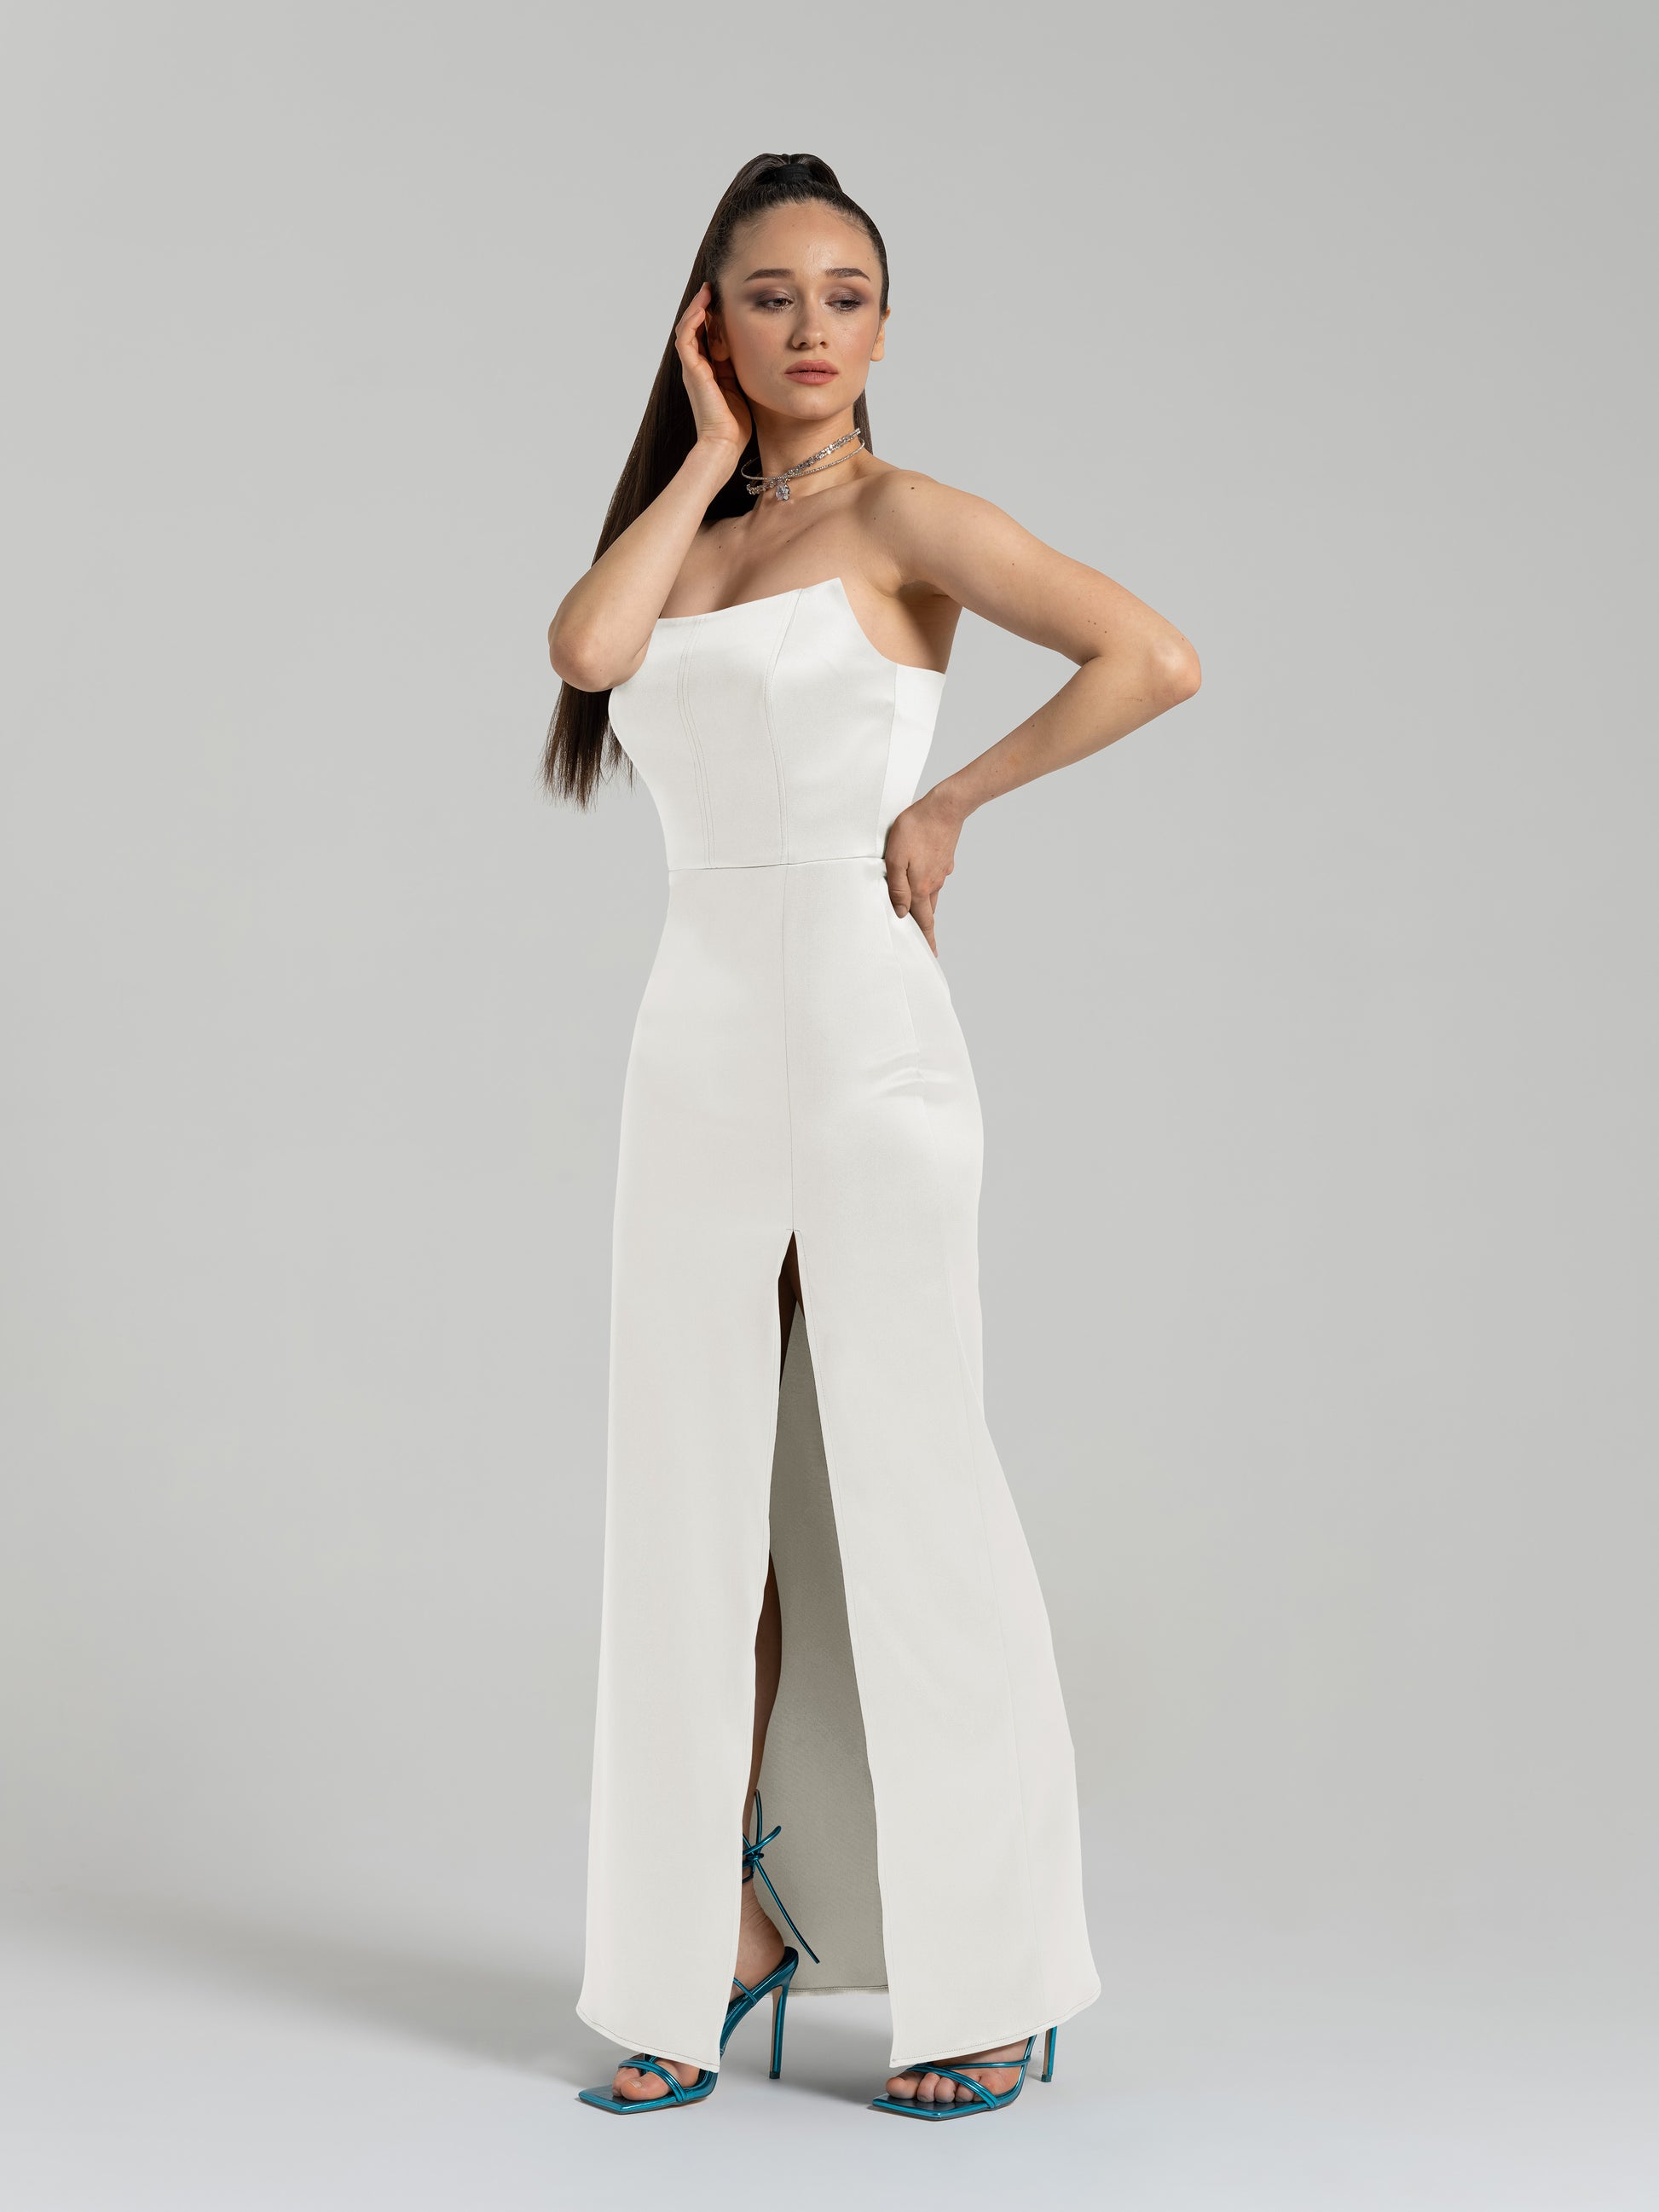 Queen of Hearts Satin Maxi Dress - Pearl White by Tia Dorraine Women's Luxury Fashion Designer Clothing Brand